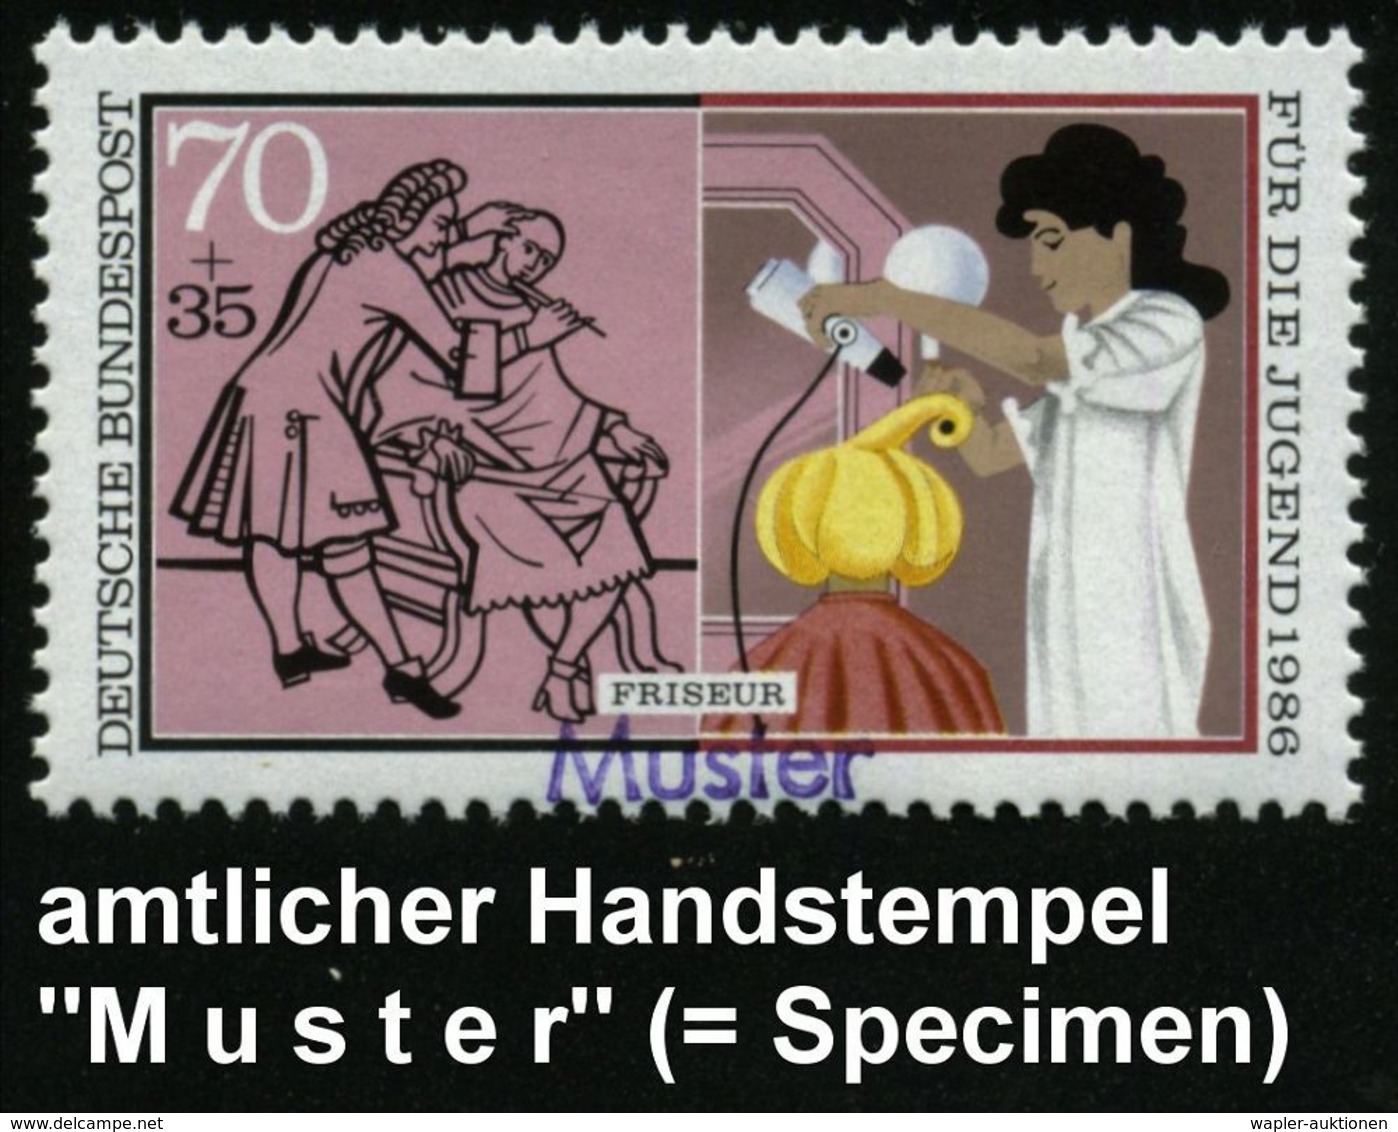 HAAR / BART / RASUR / FRISEUR : B.R.D. 1986 (Apr.) 70 Pf.+ 35 Pf. Jugendmarke "Friseur-Handwerk" Mit Amtl. Handstempel   - Pharmacy